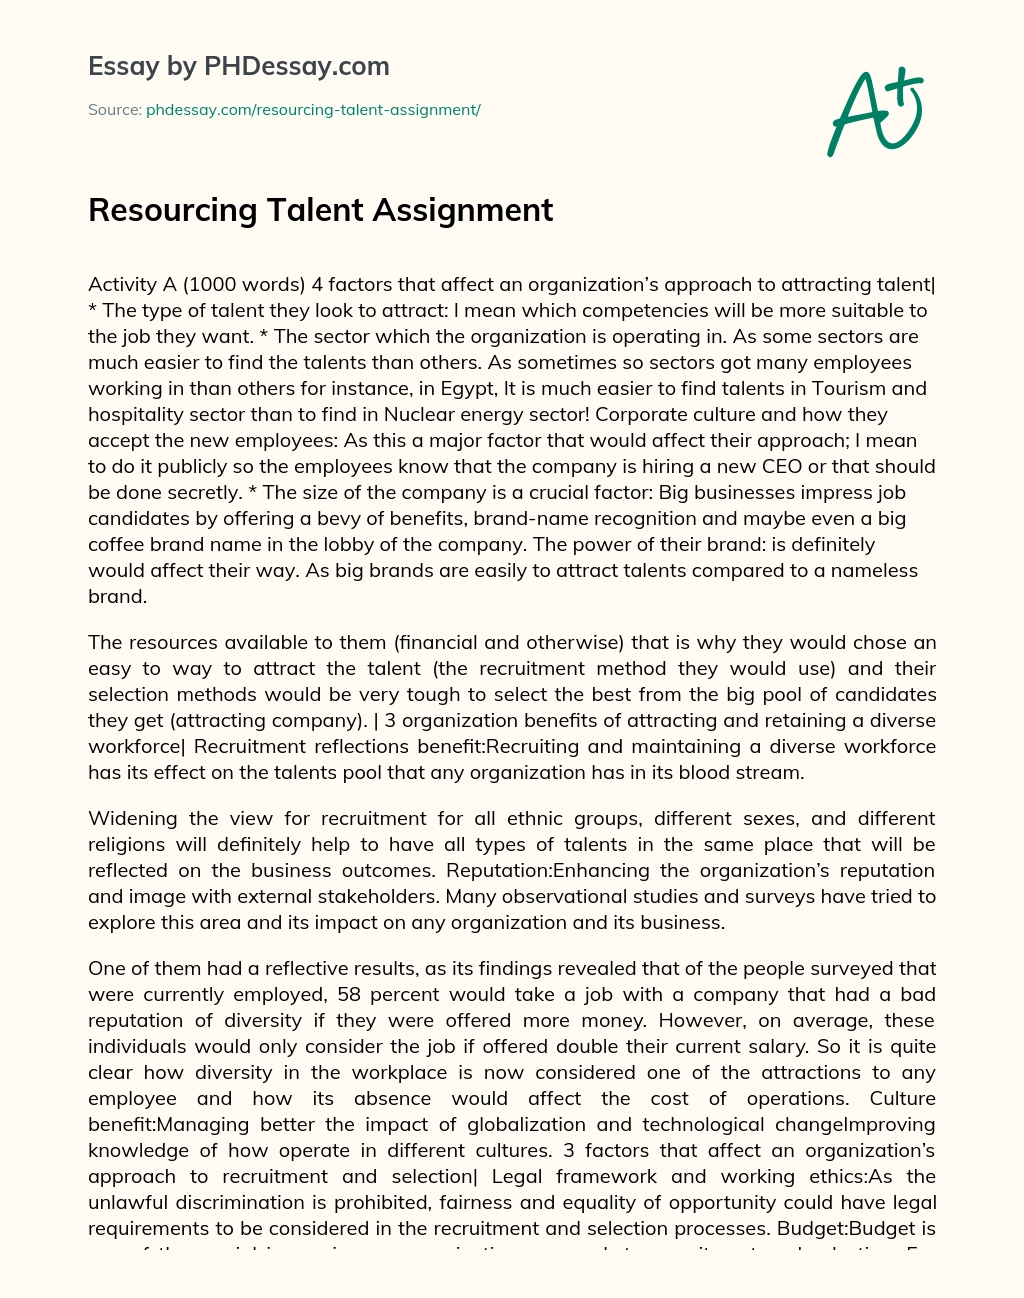 Resourcing Talent Assignment essay